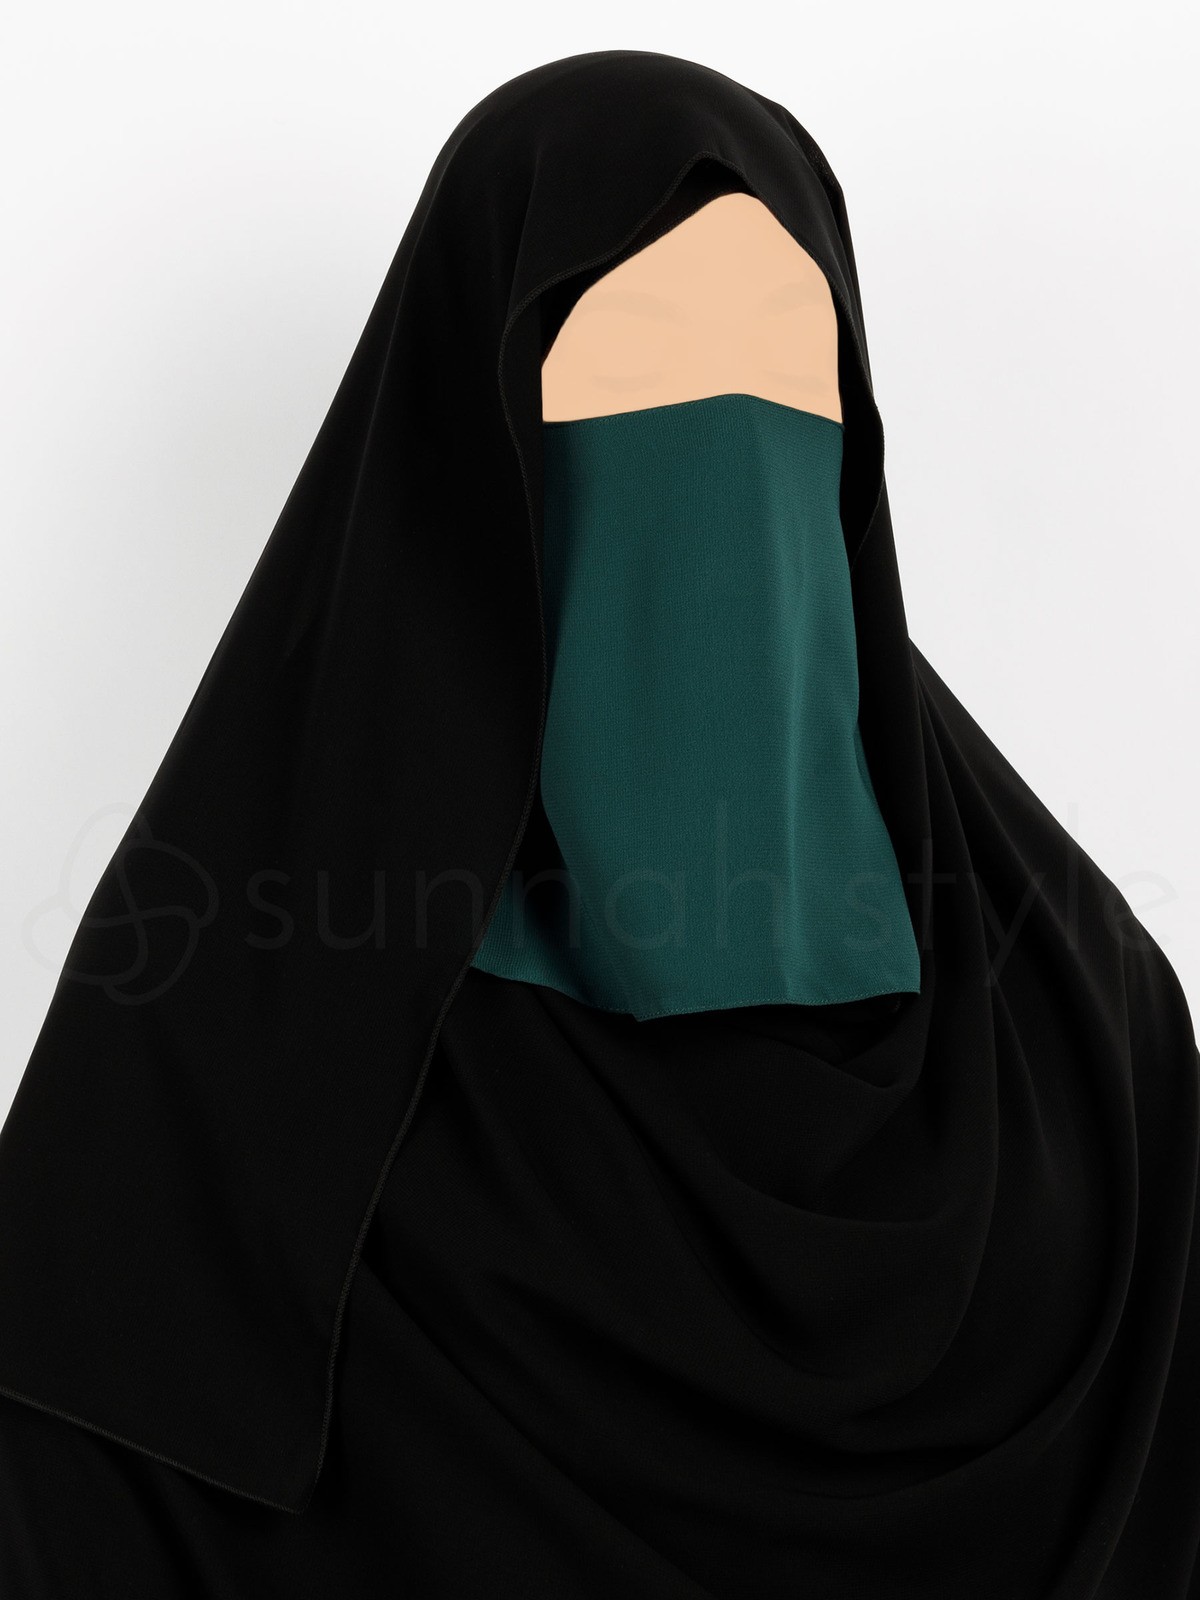 Sunnah Style - Short Elastic Half Niqab (Black)